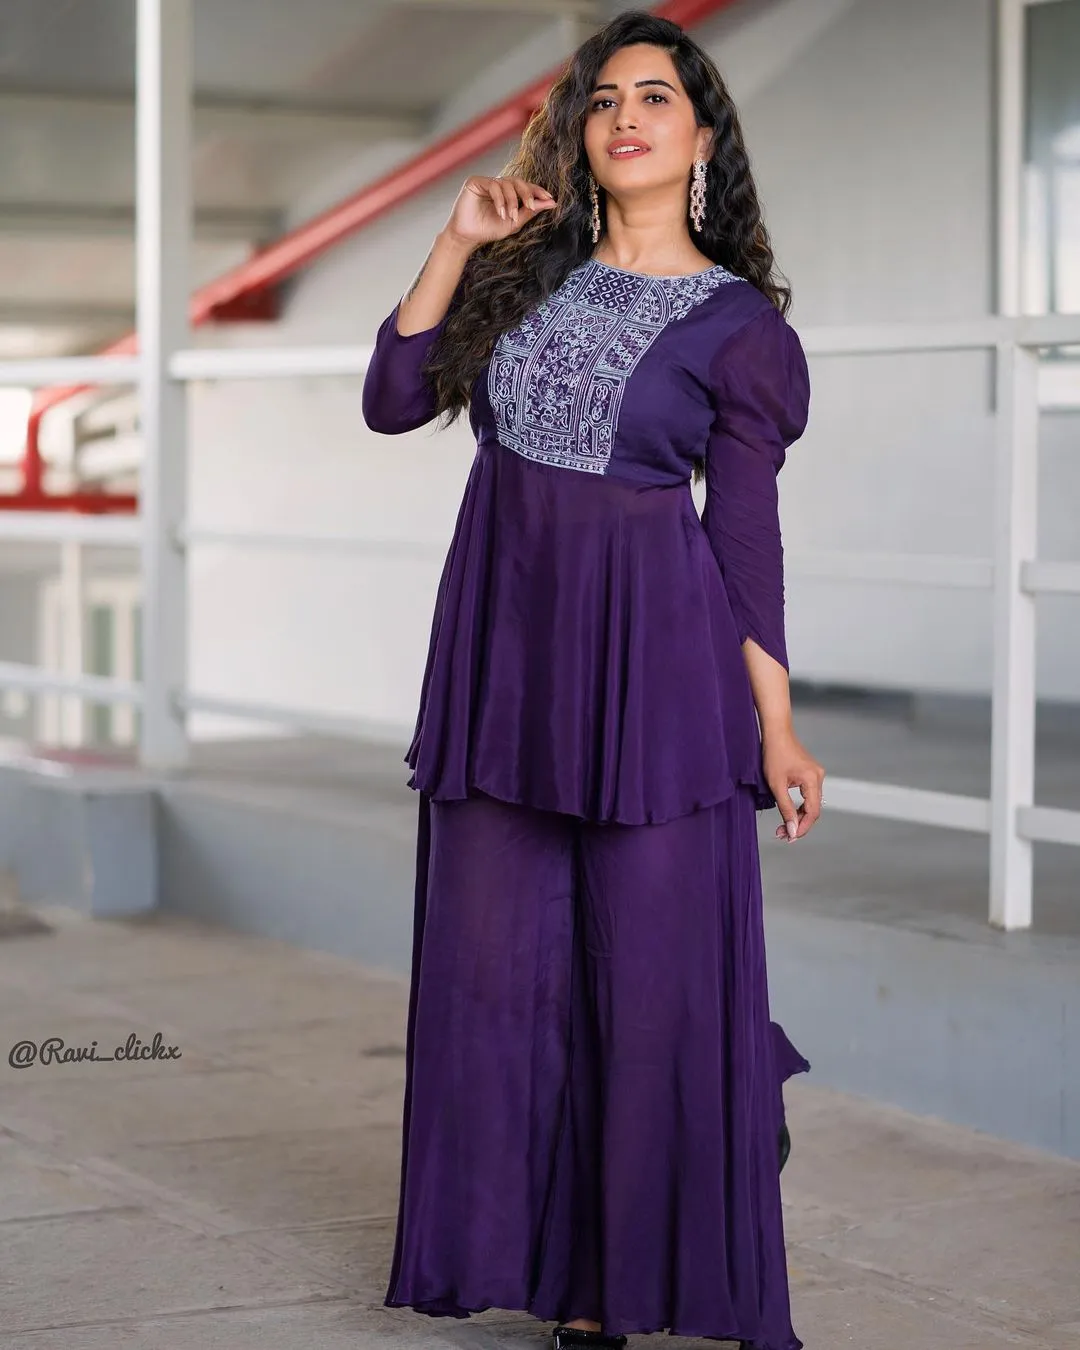 Telugu TV Actress Sravanthi Chokarapu Photoshoot in Violet Dress